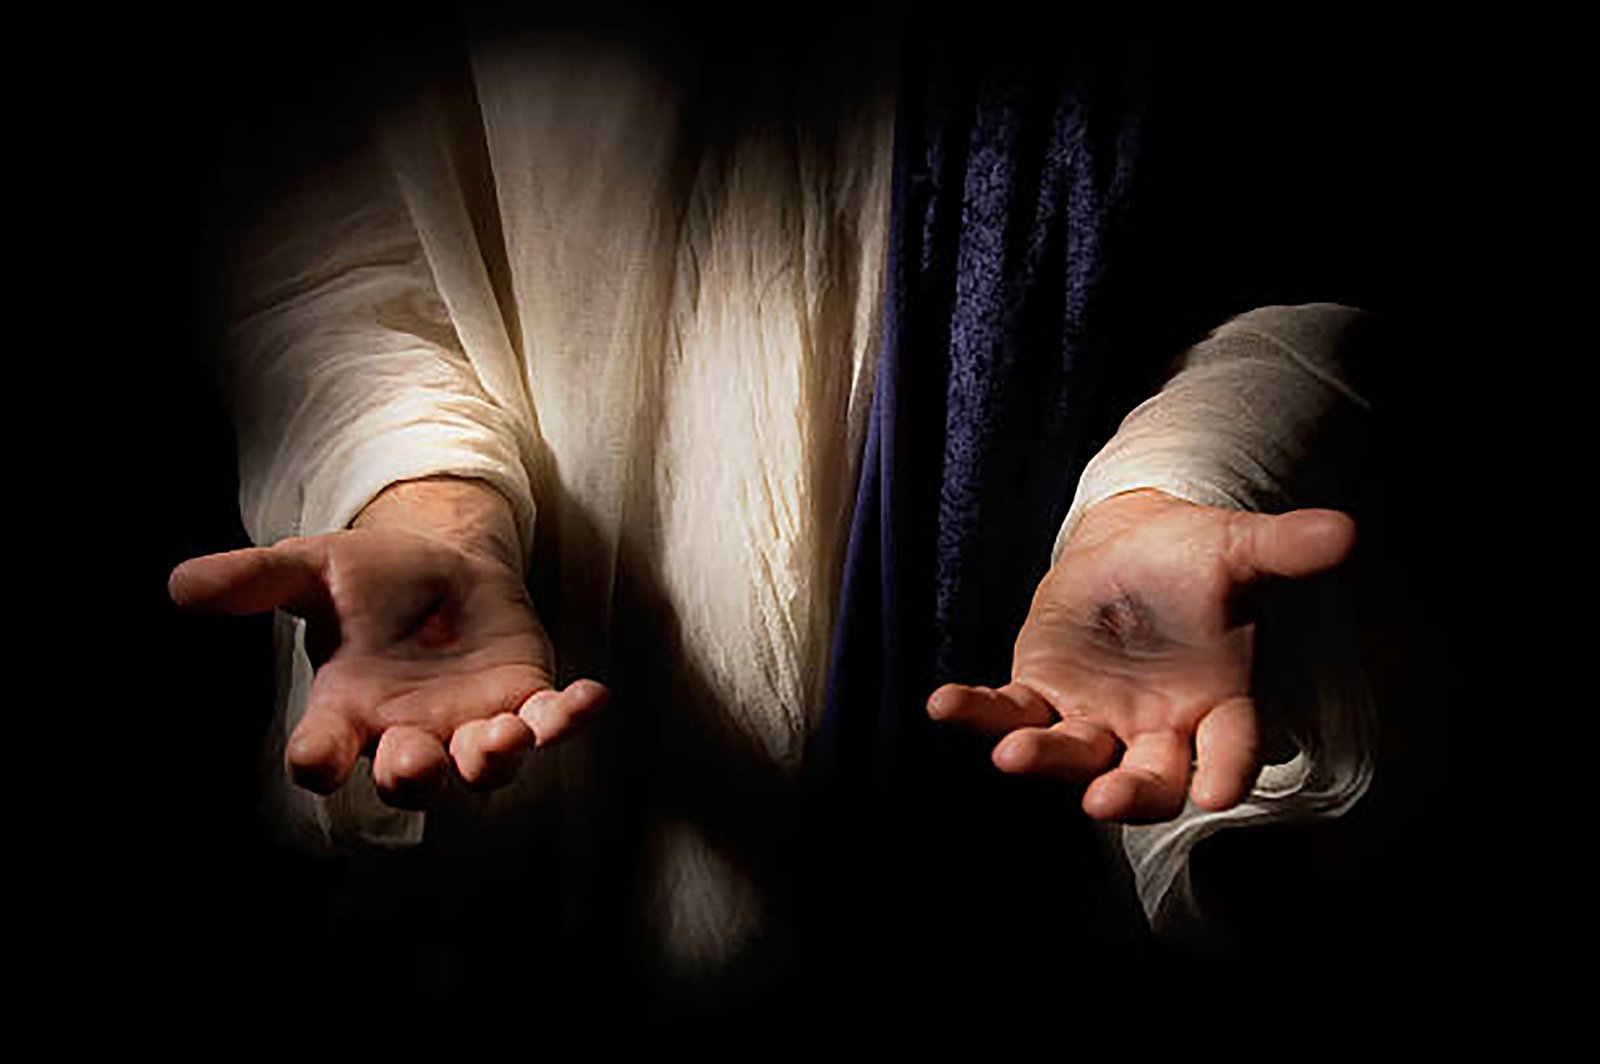 Representation of Jesus hands